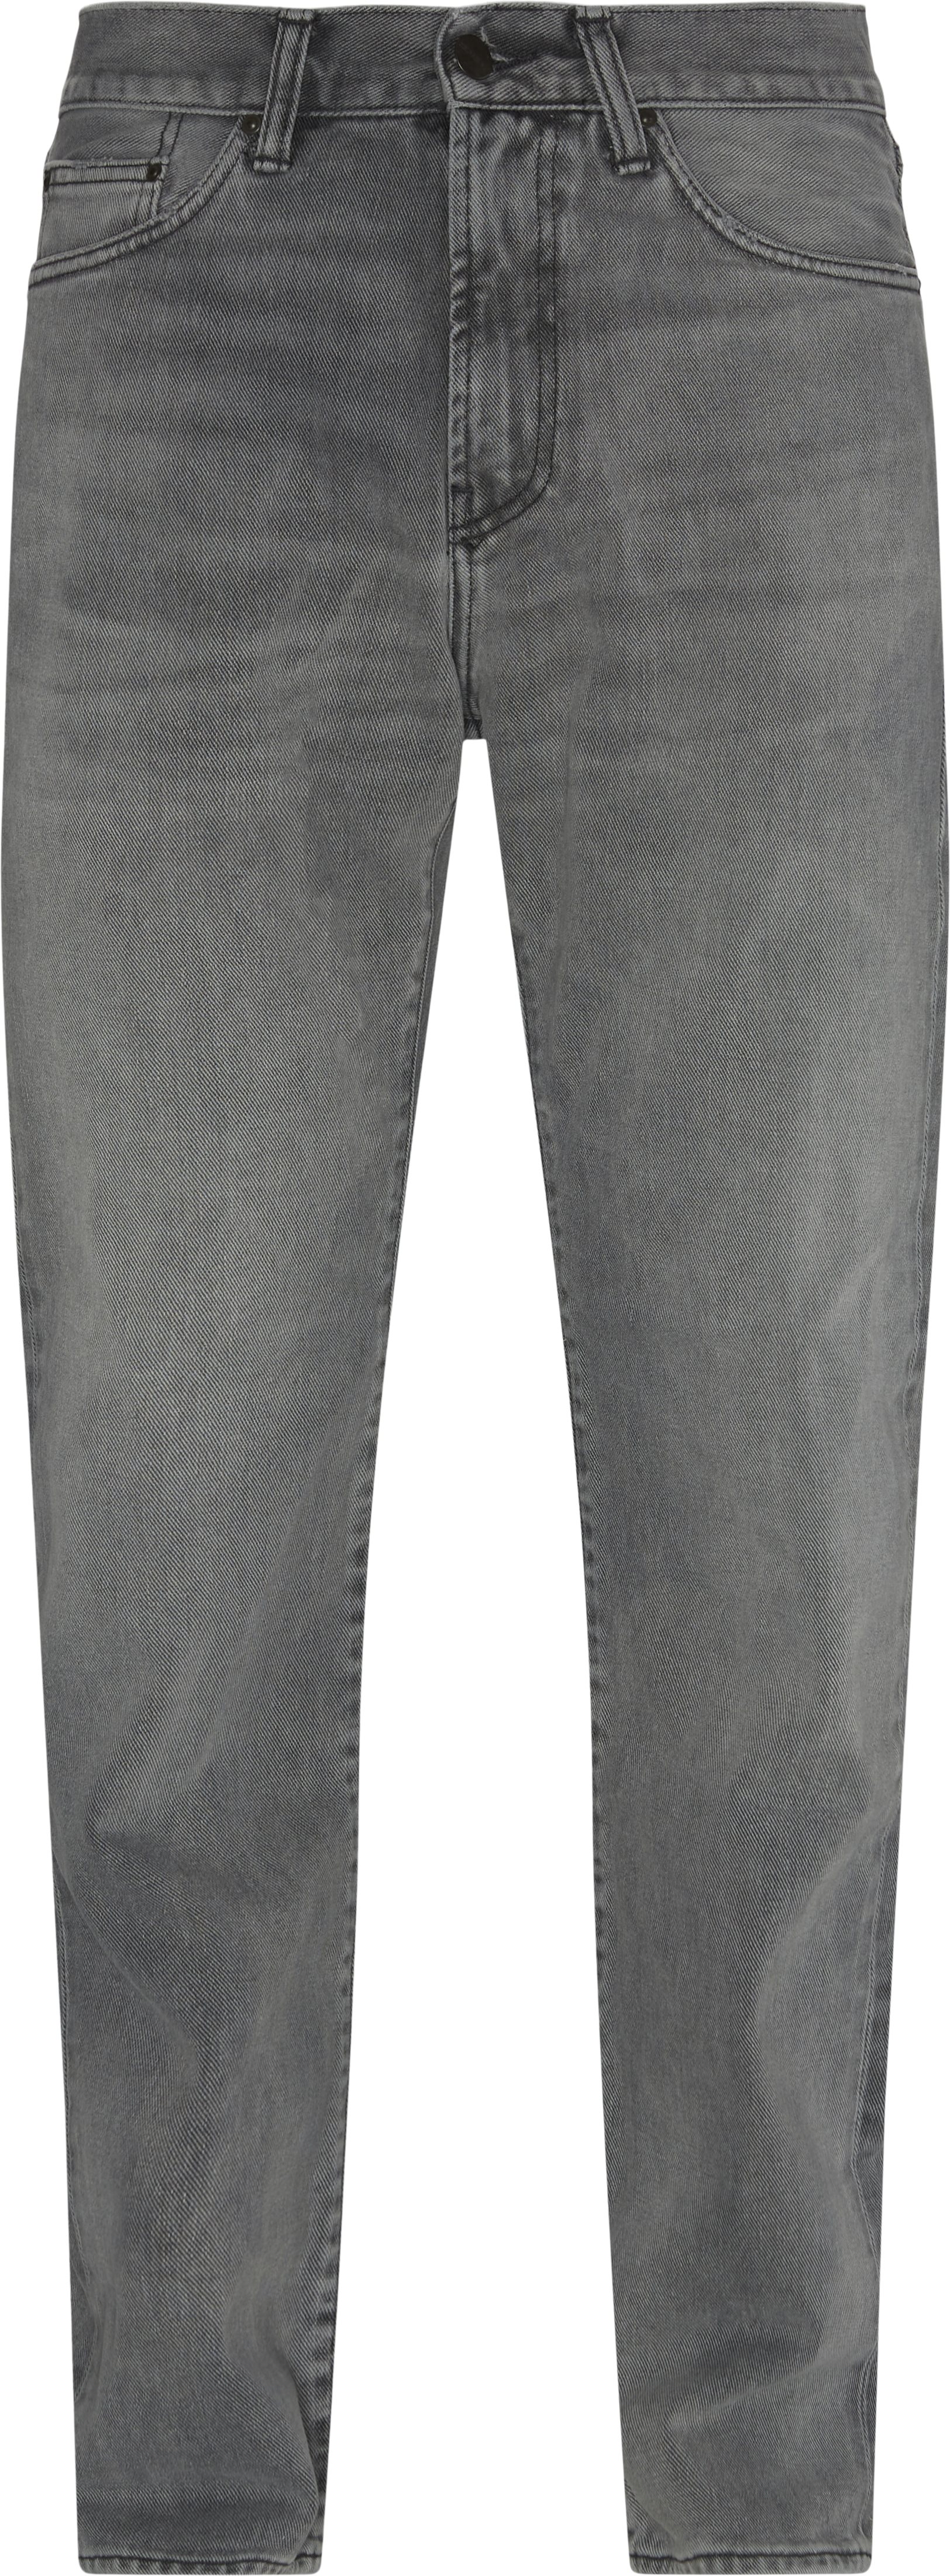 Pontiac Pant I027231 - Jeans - Straight fit - Sort